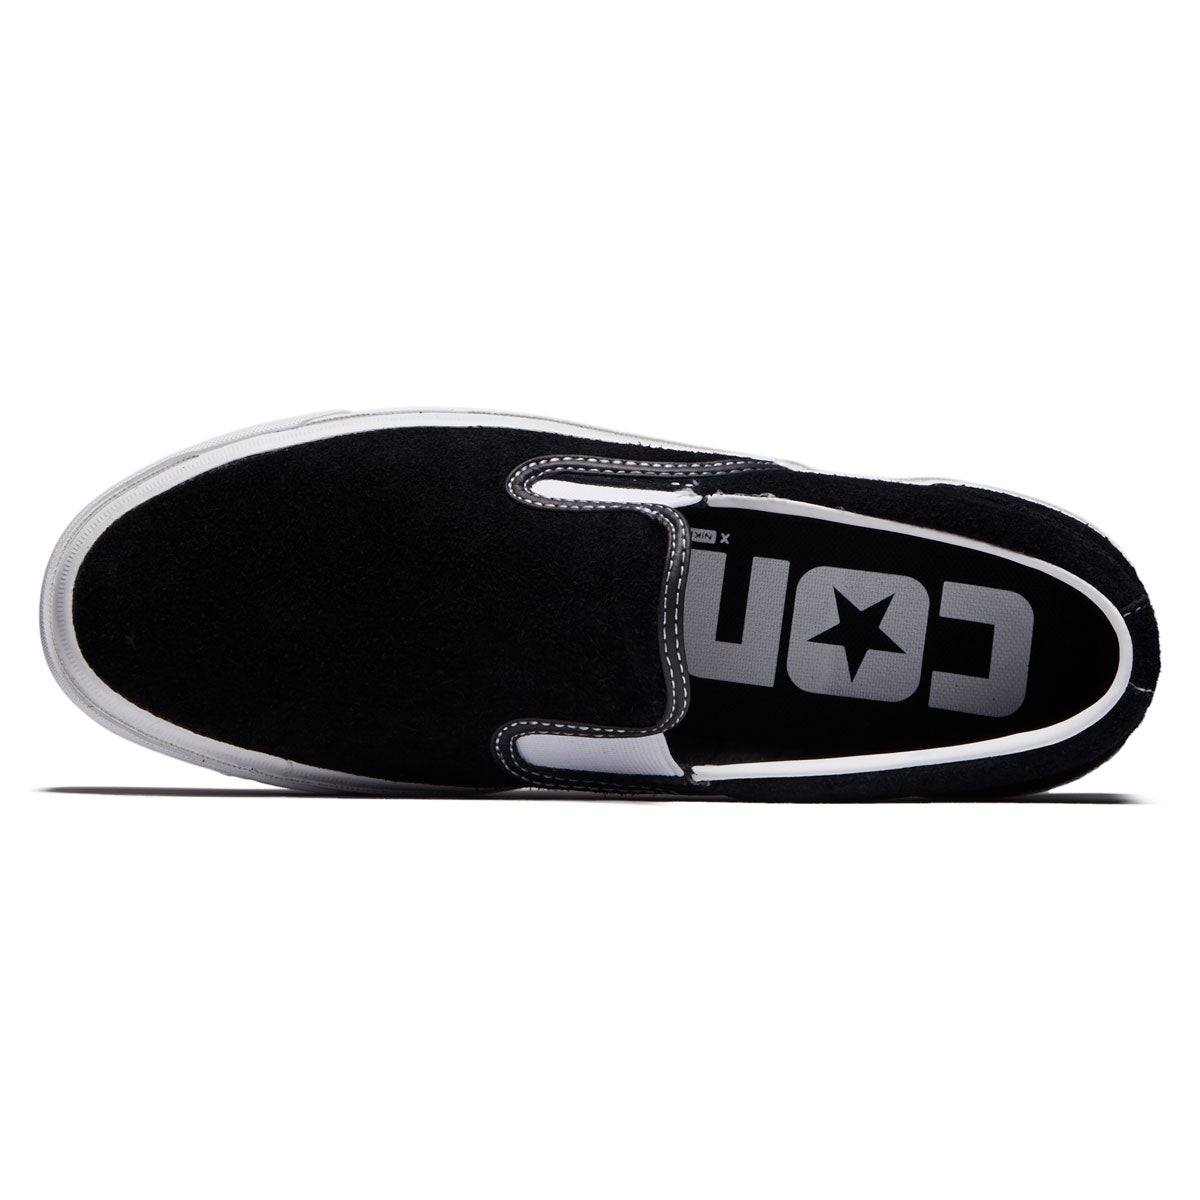 Converse Cc Slip Pro Shoes - Black/White/White – Board Shop